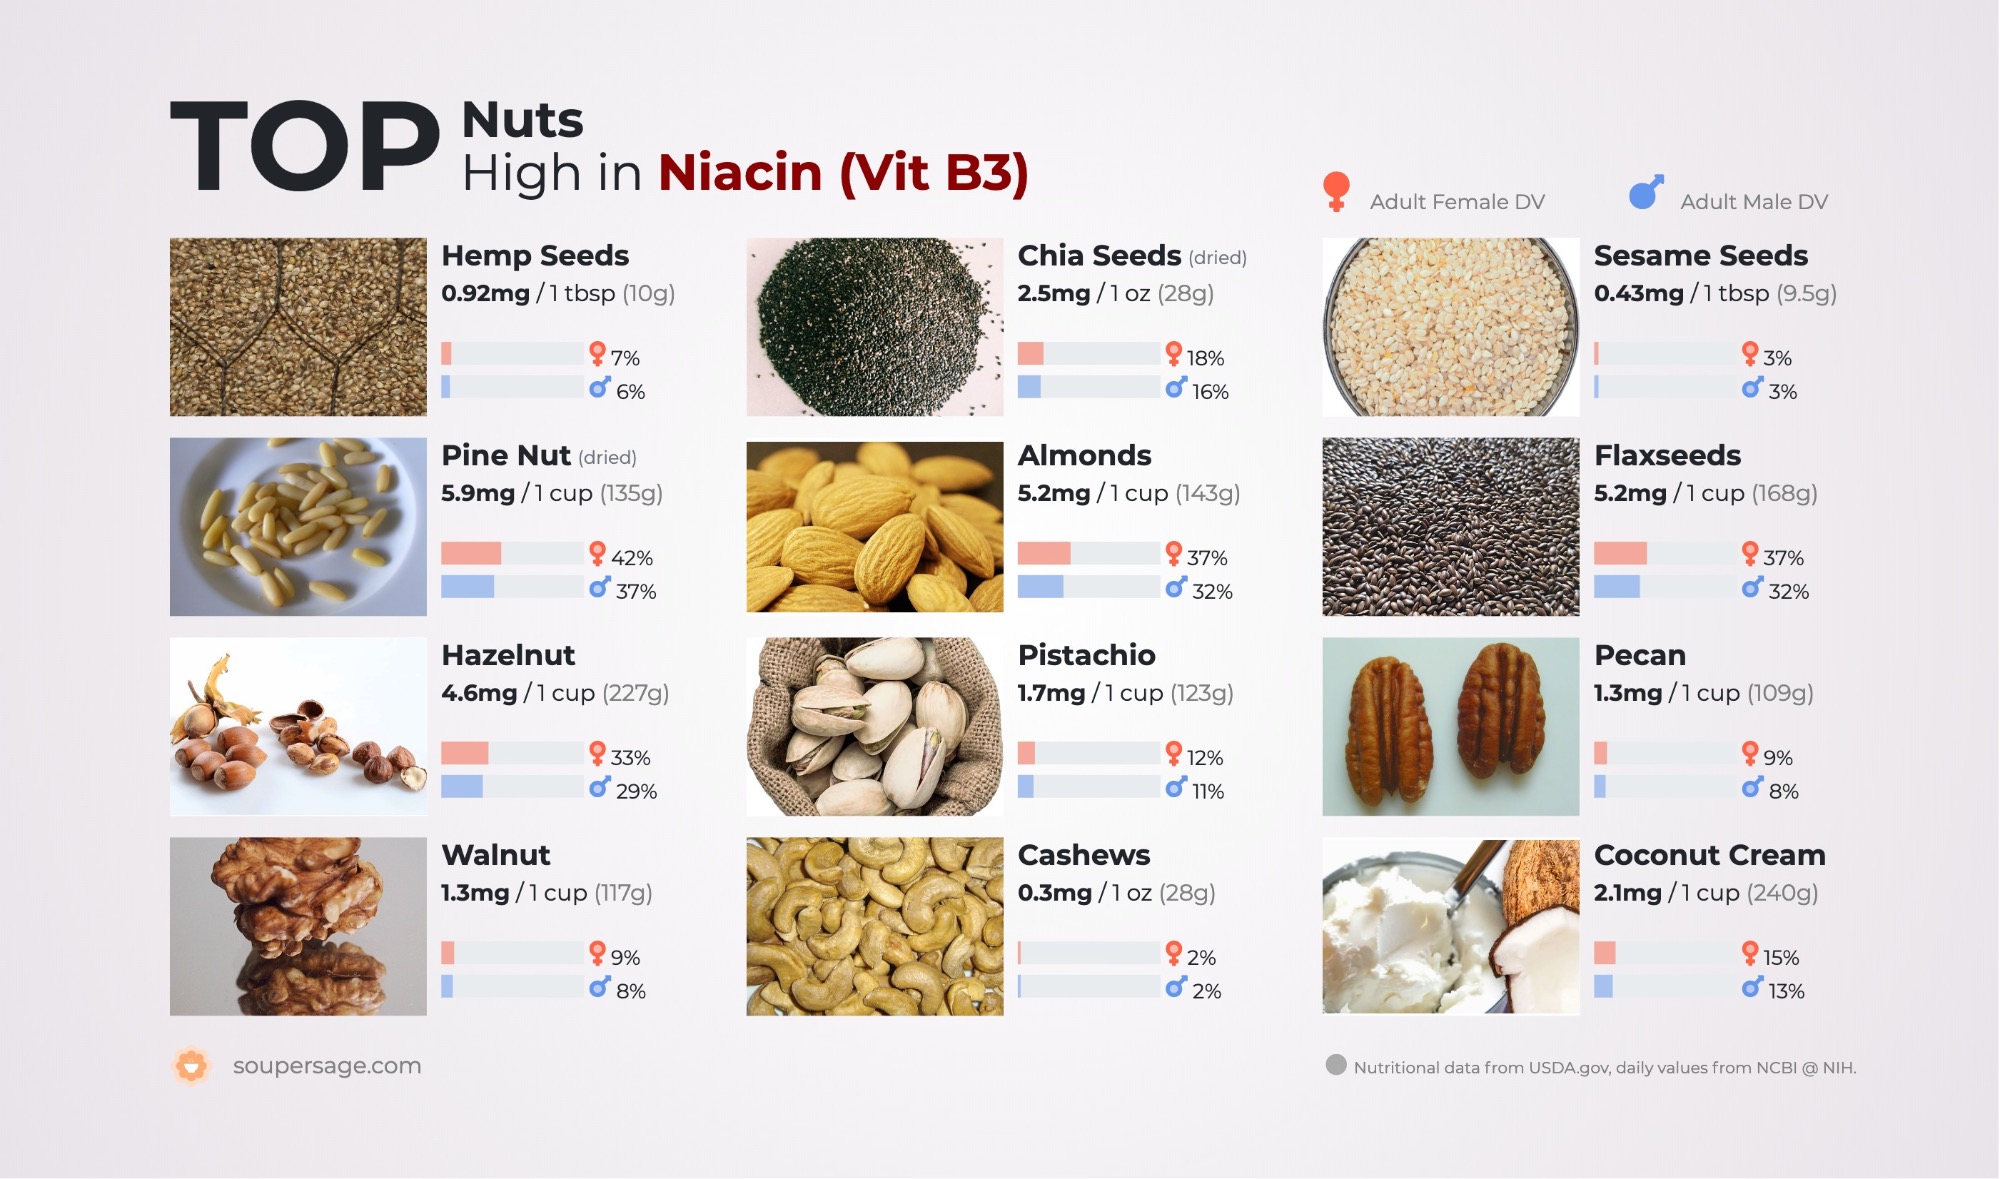 image of Top Nuts High in Niacin (Vit B3)